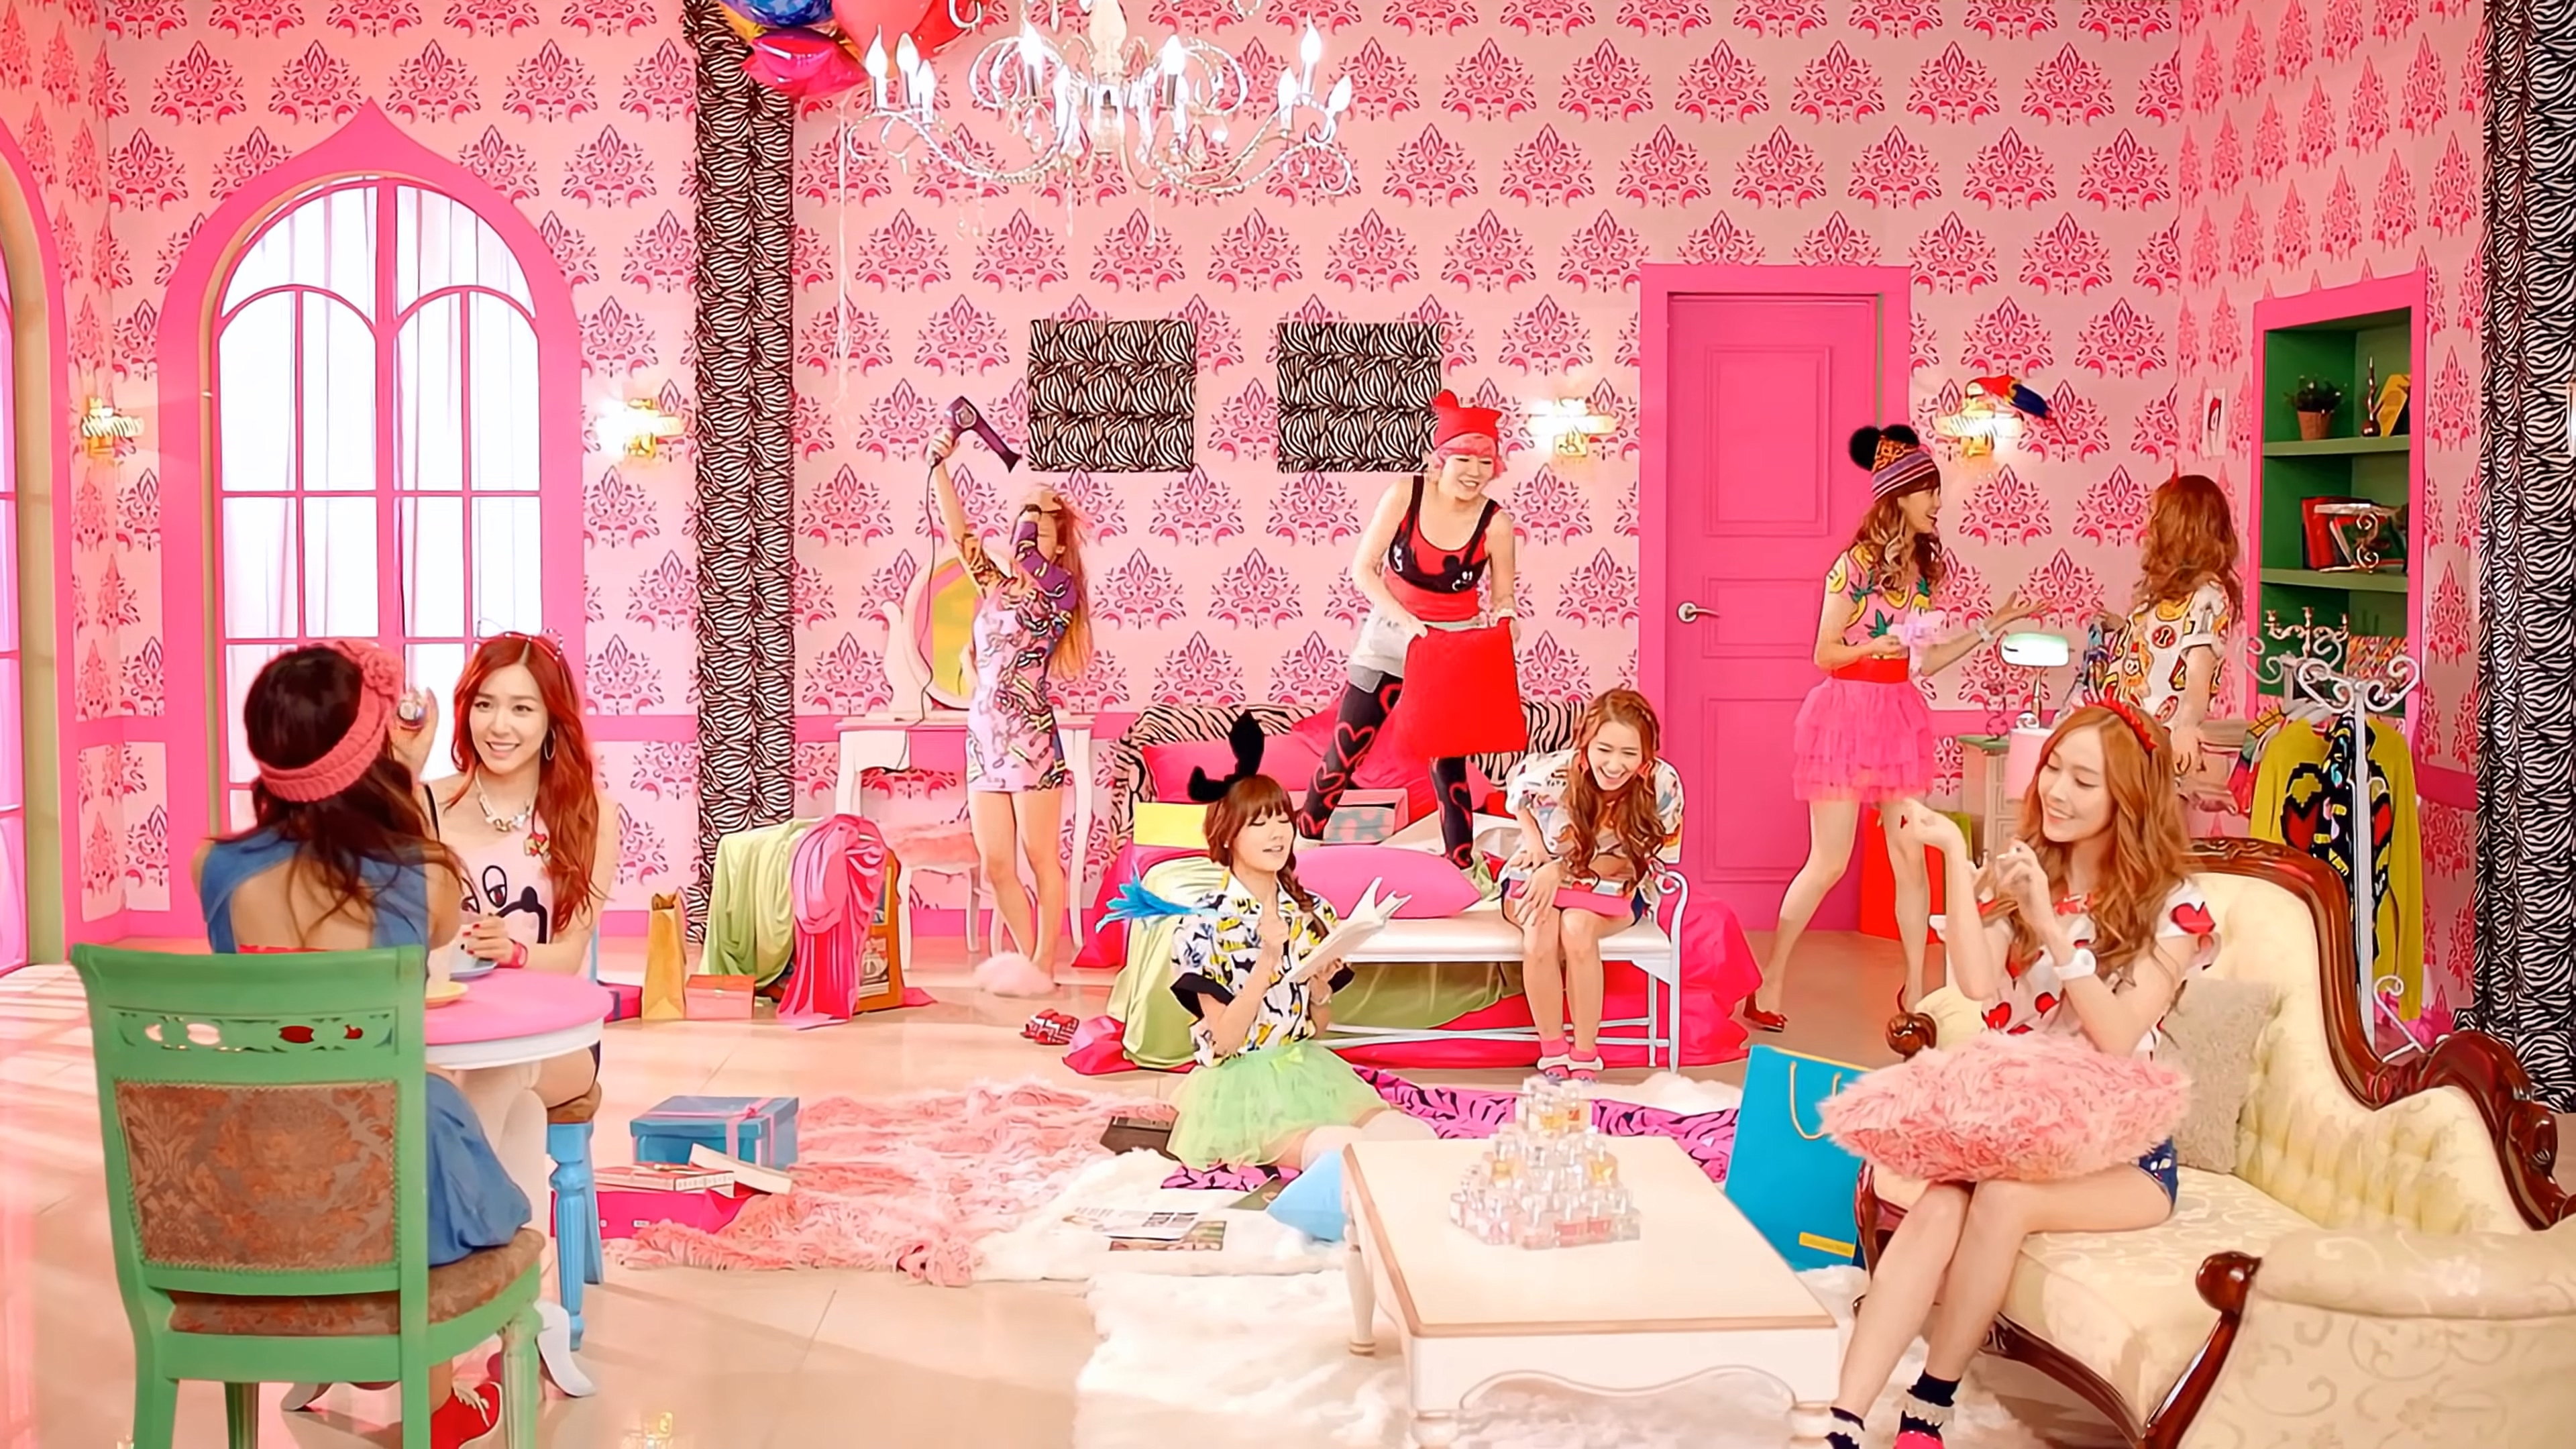 少女时代 Girls' Generation 《I GOT A BOY》소녀시대  Music Video 4K UHD 60fps 938MB